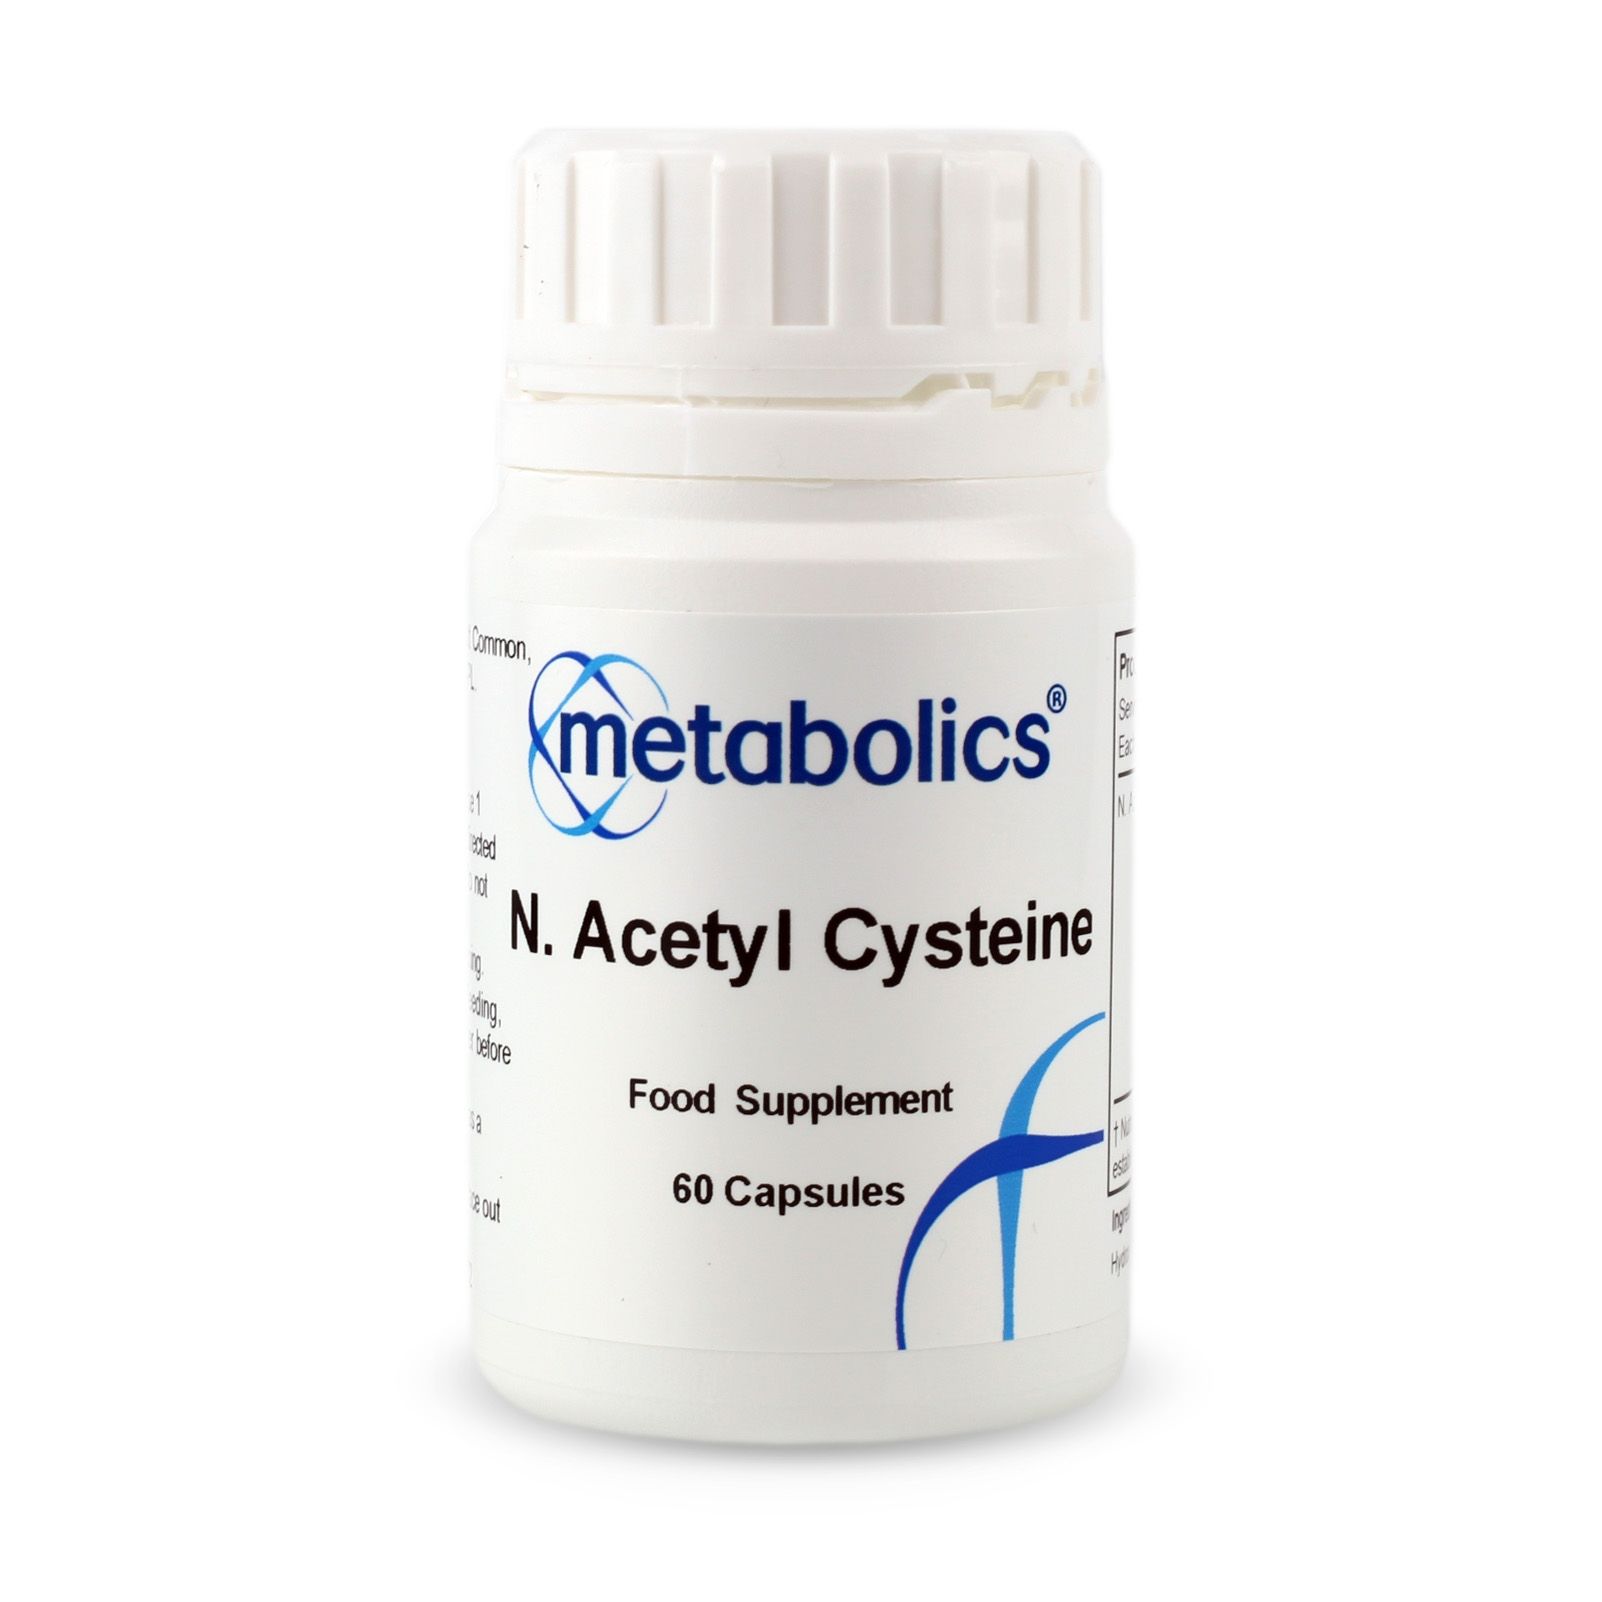 N. Acetyl Cysteine (Pot of 60 capsules)